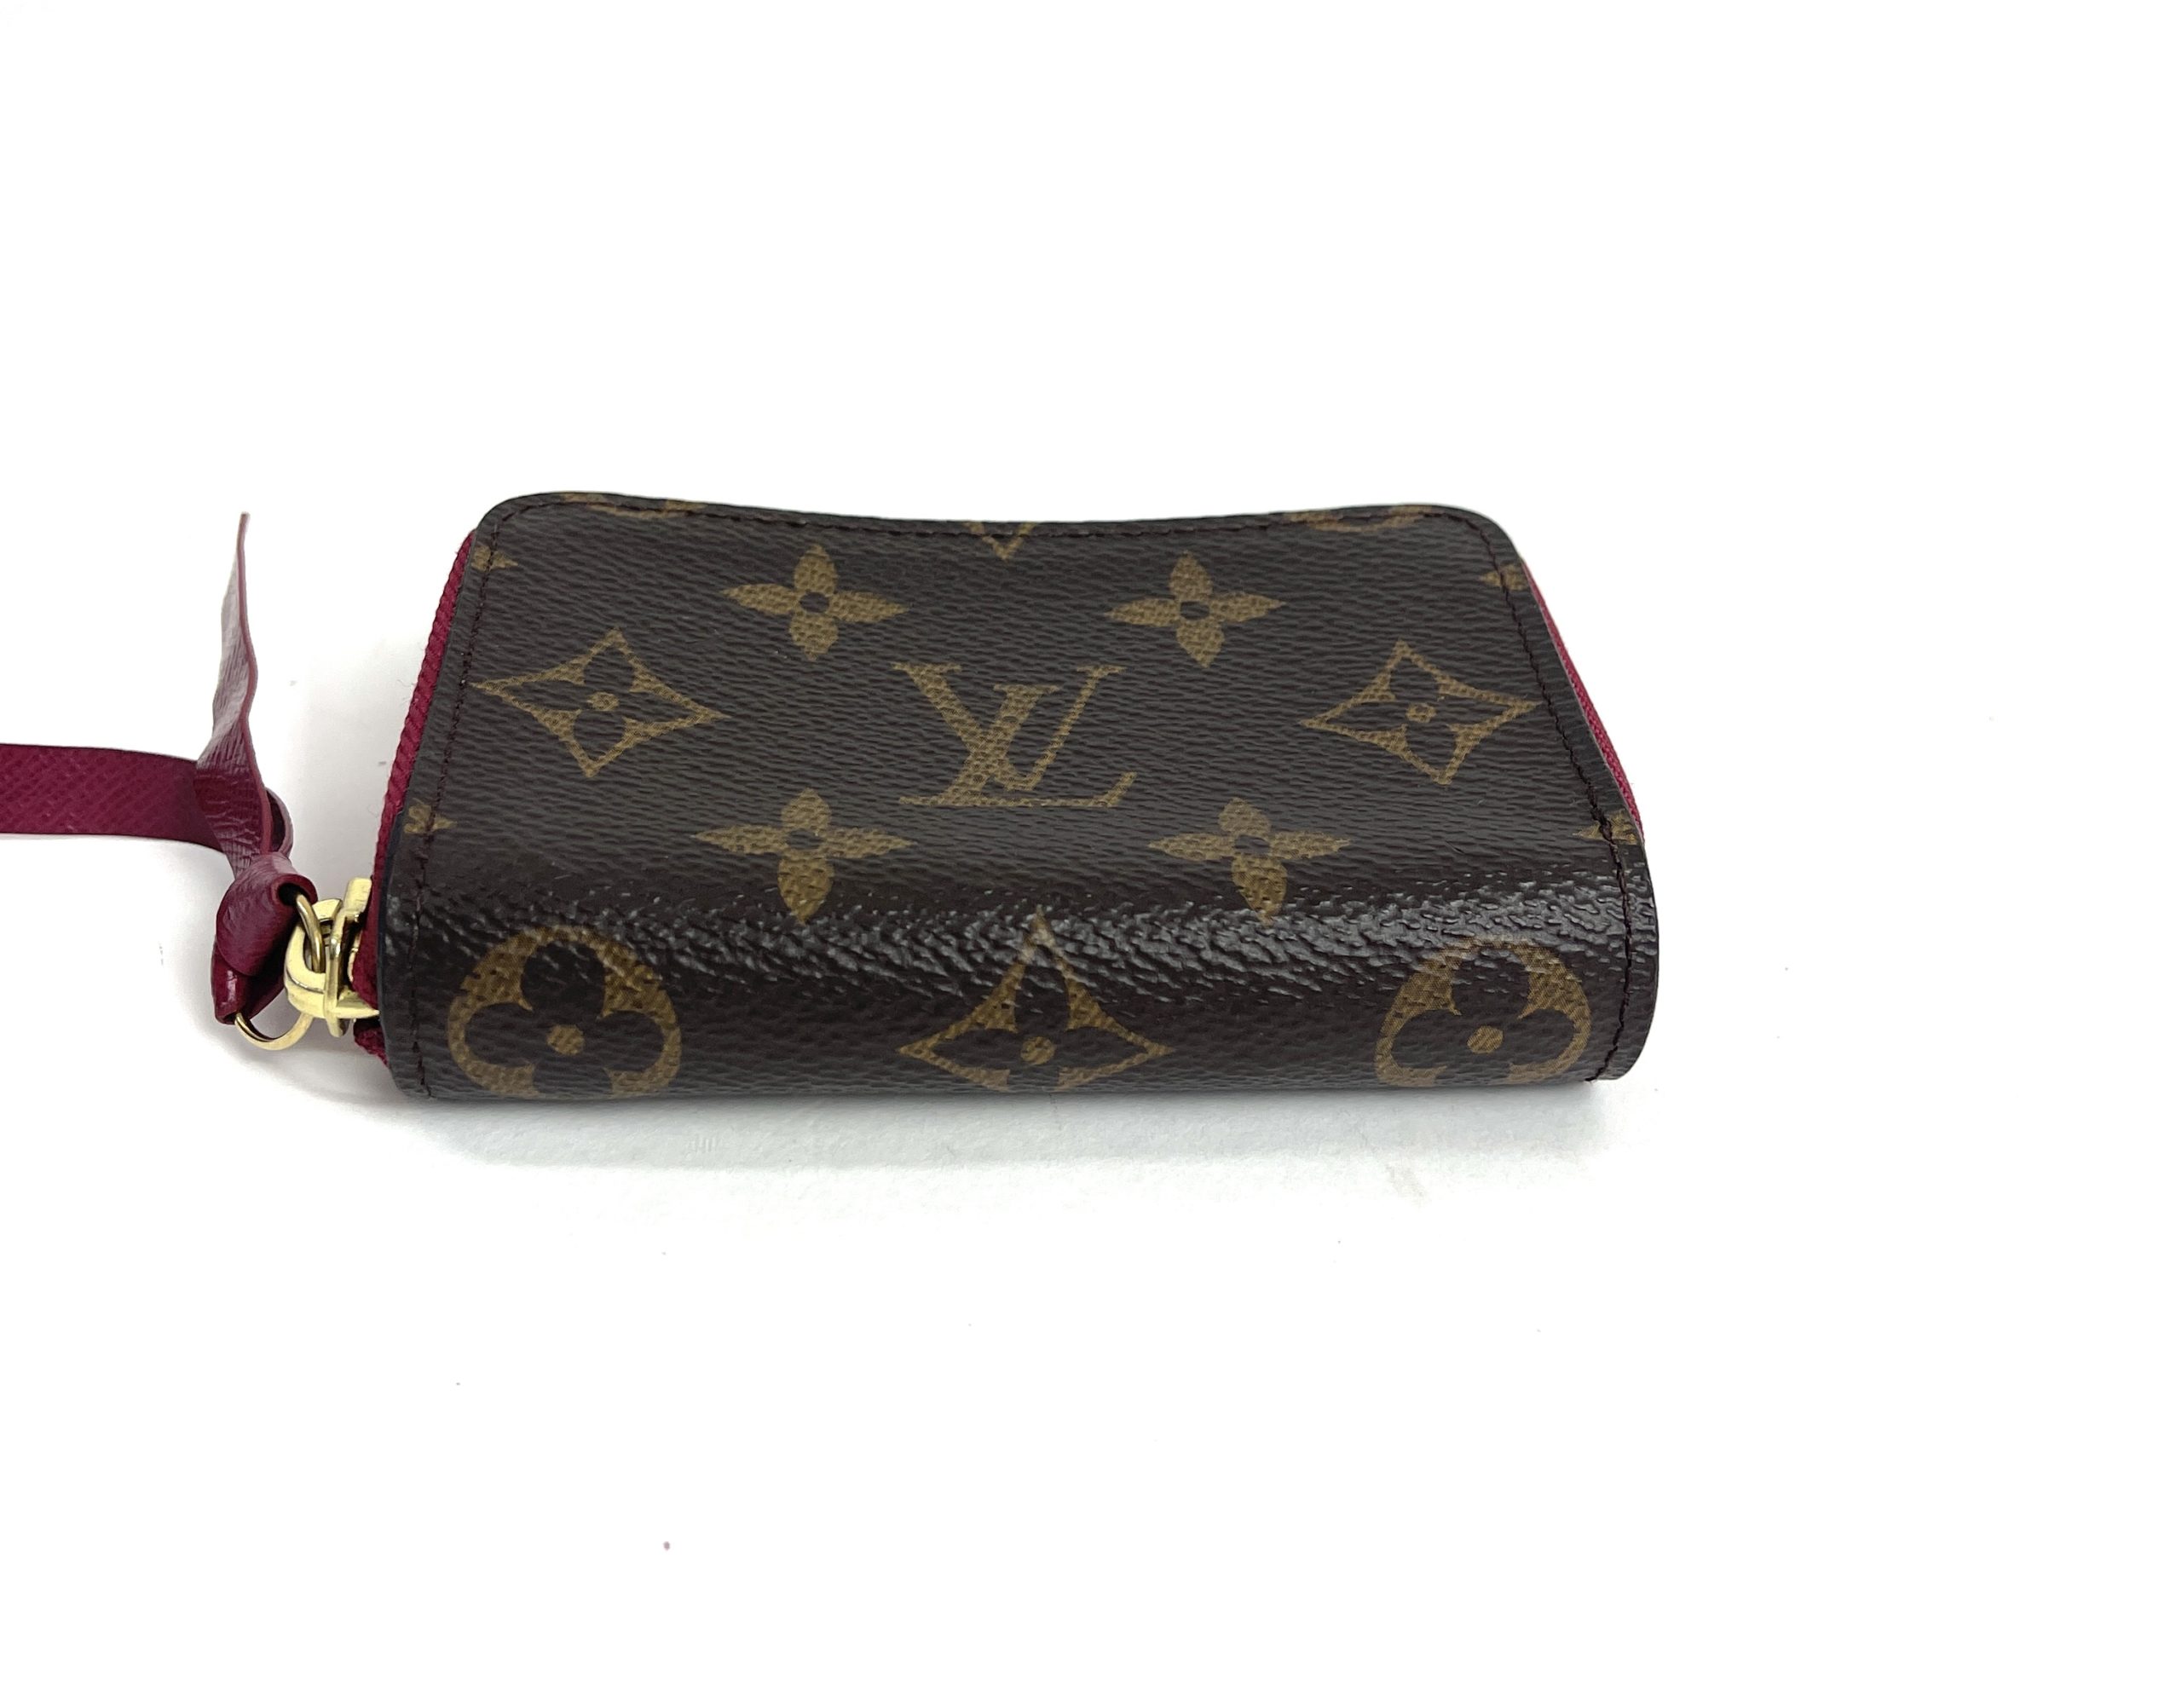 Louis Vuitton Multicartes Holder Compact Wallet in Monogram Fuchsia - SOLD